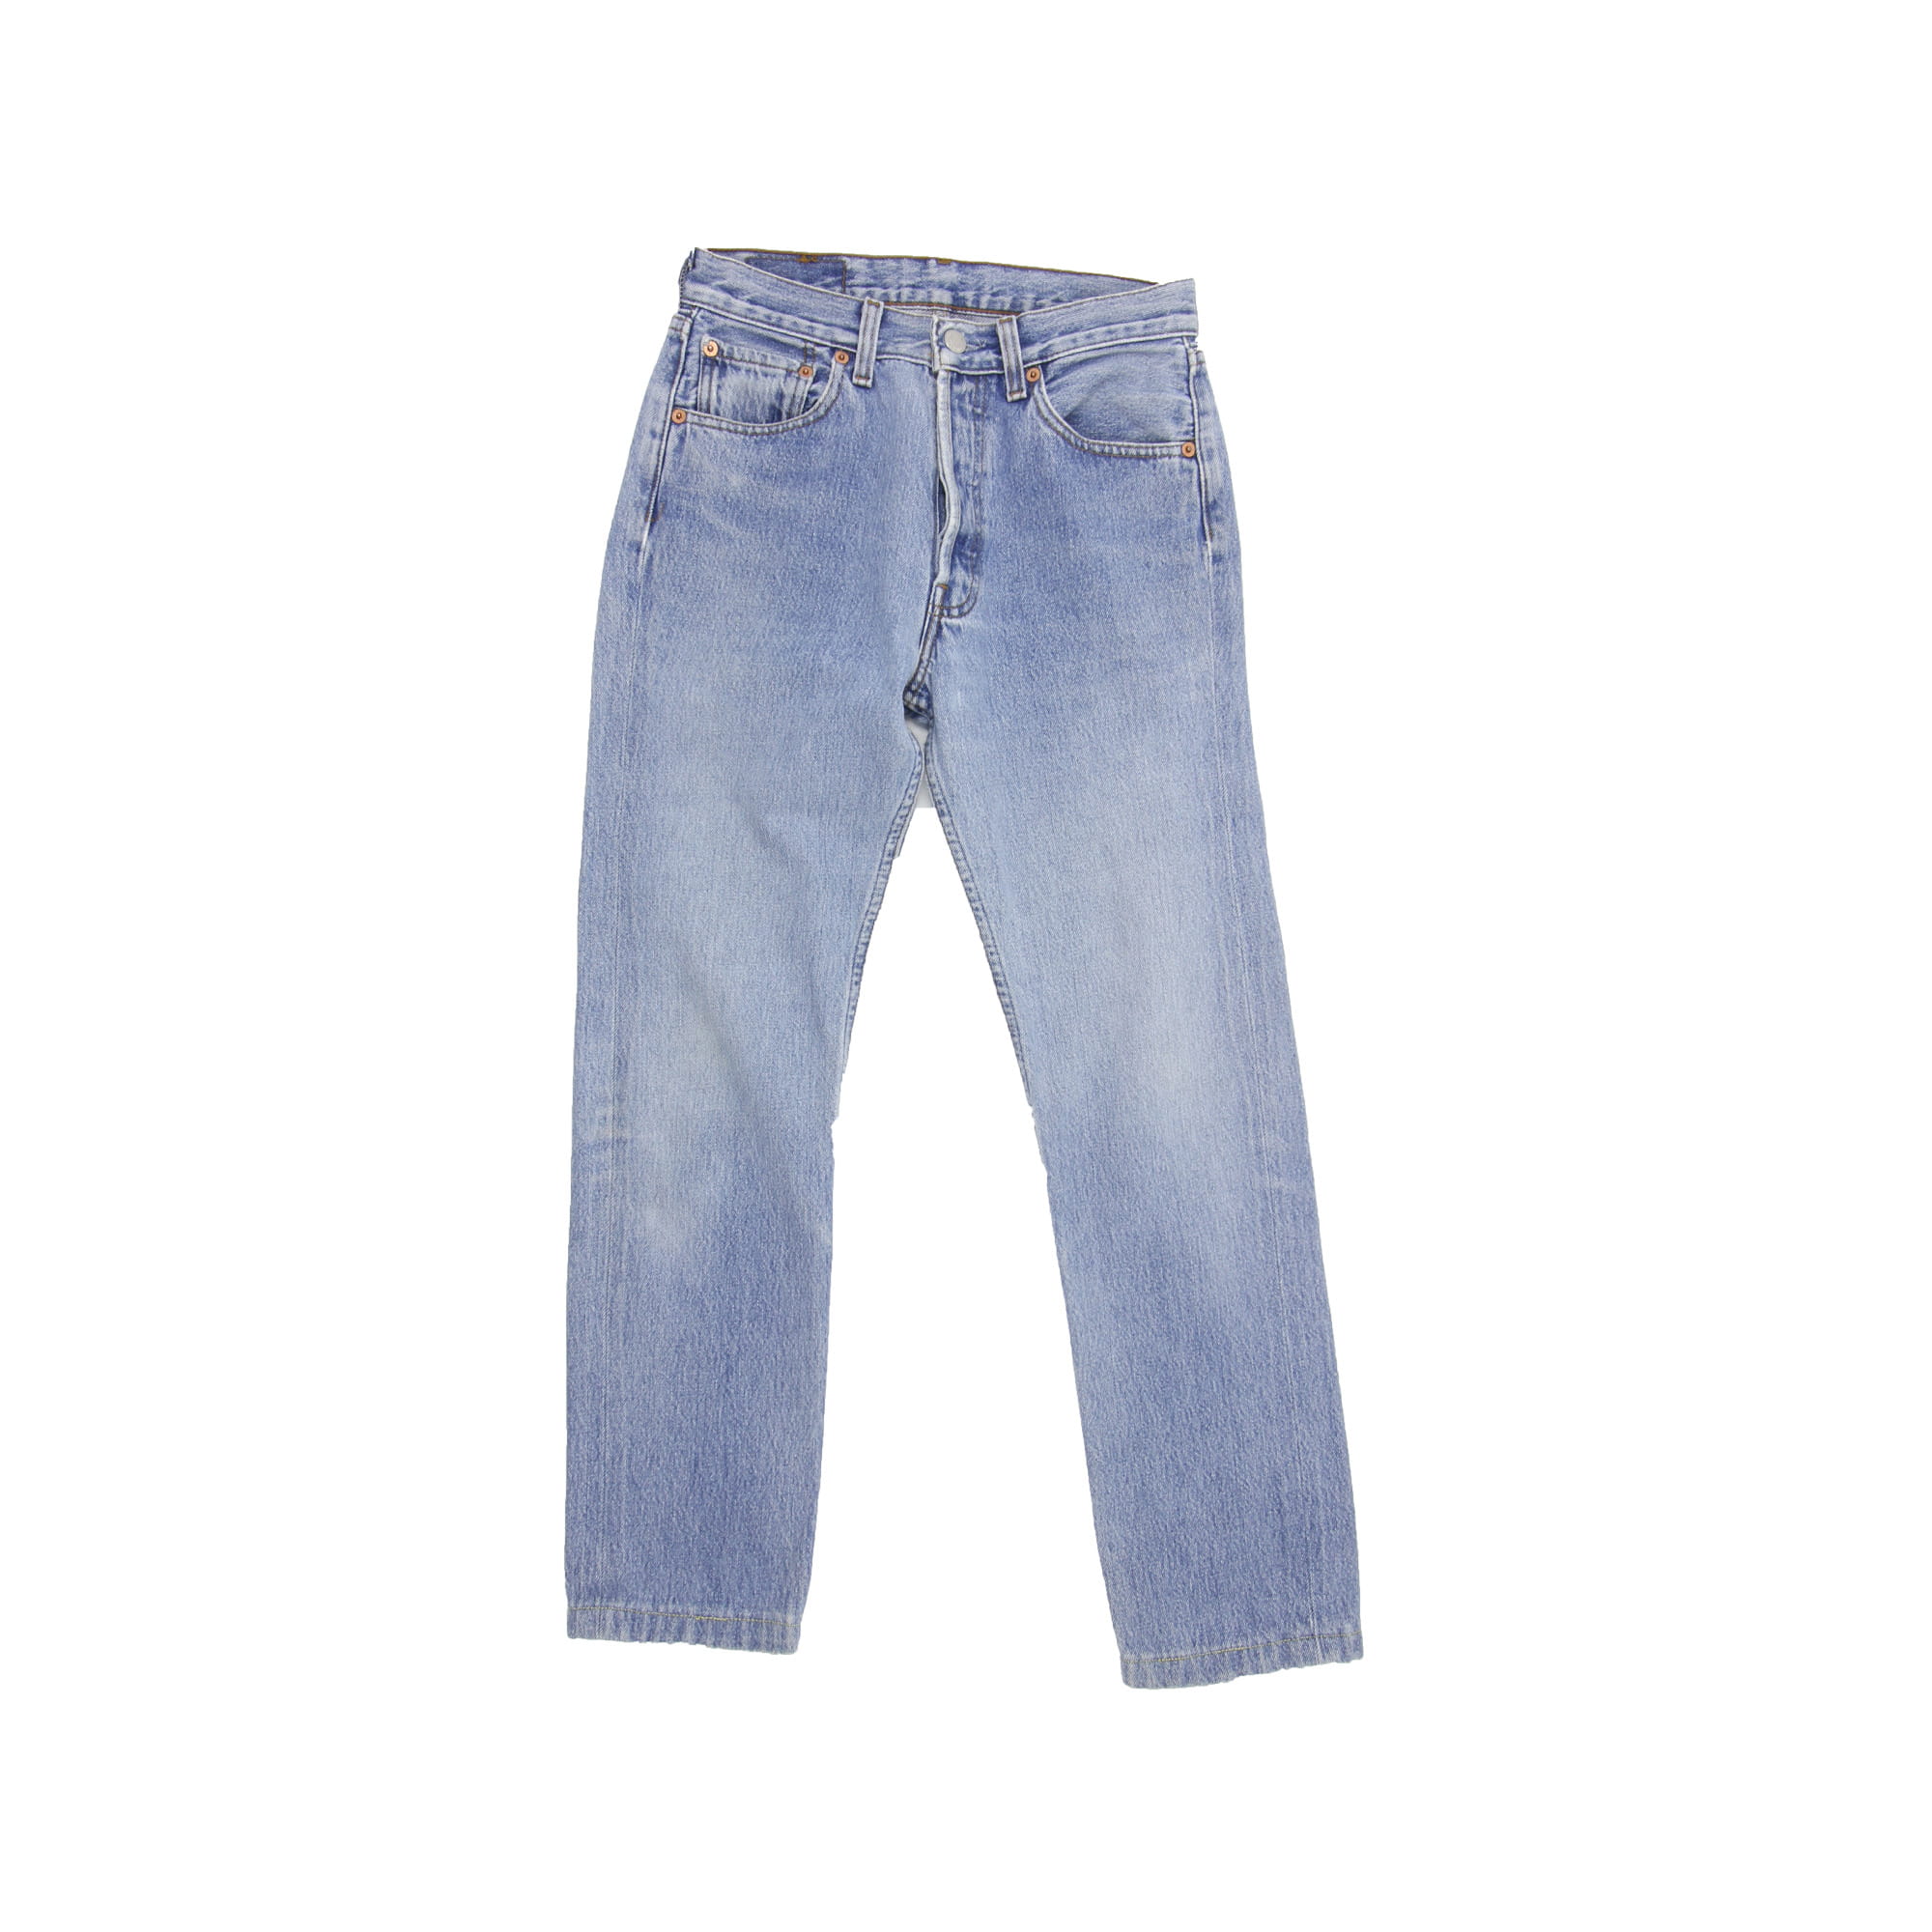 Levi's 501 Jeans -  W28 L32